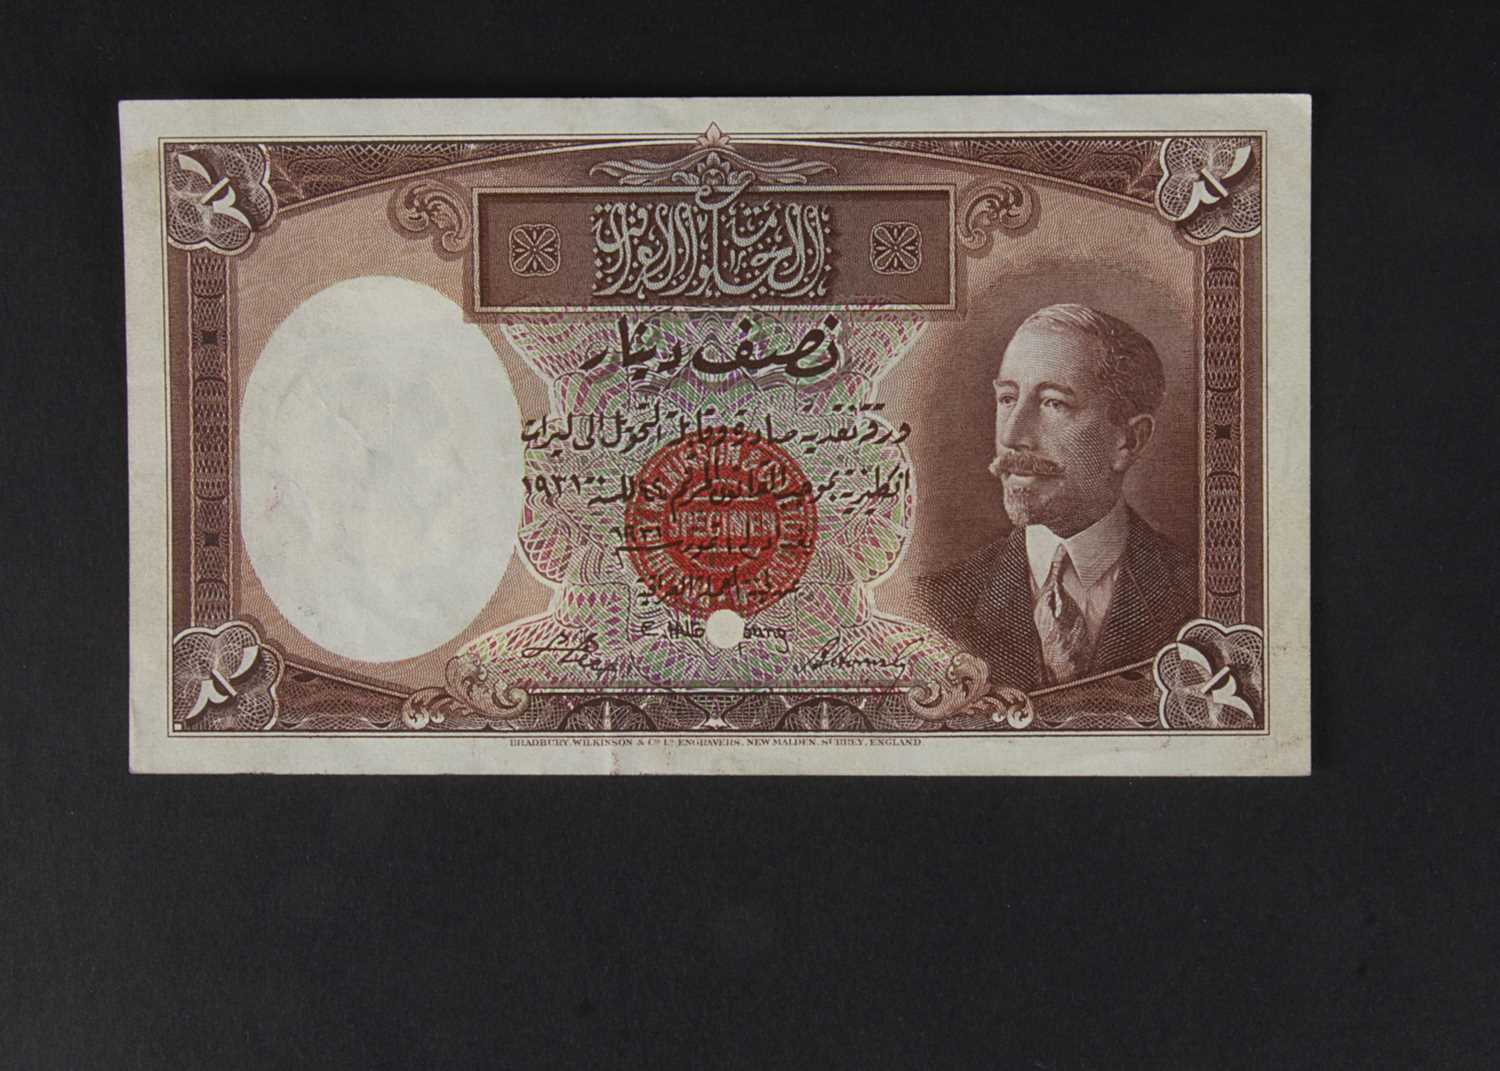 Specimen Bank Note: Government of Iraq specimen Half Dinar,